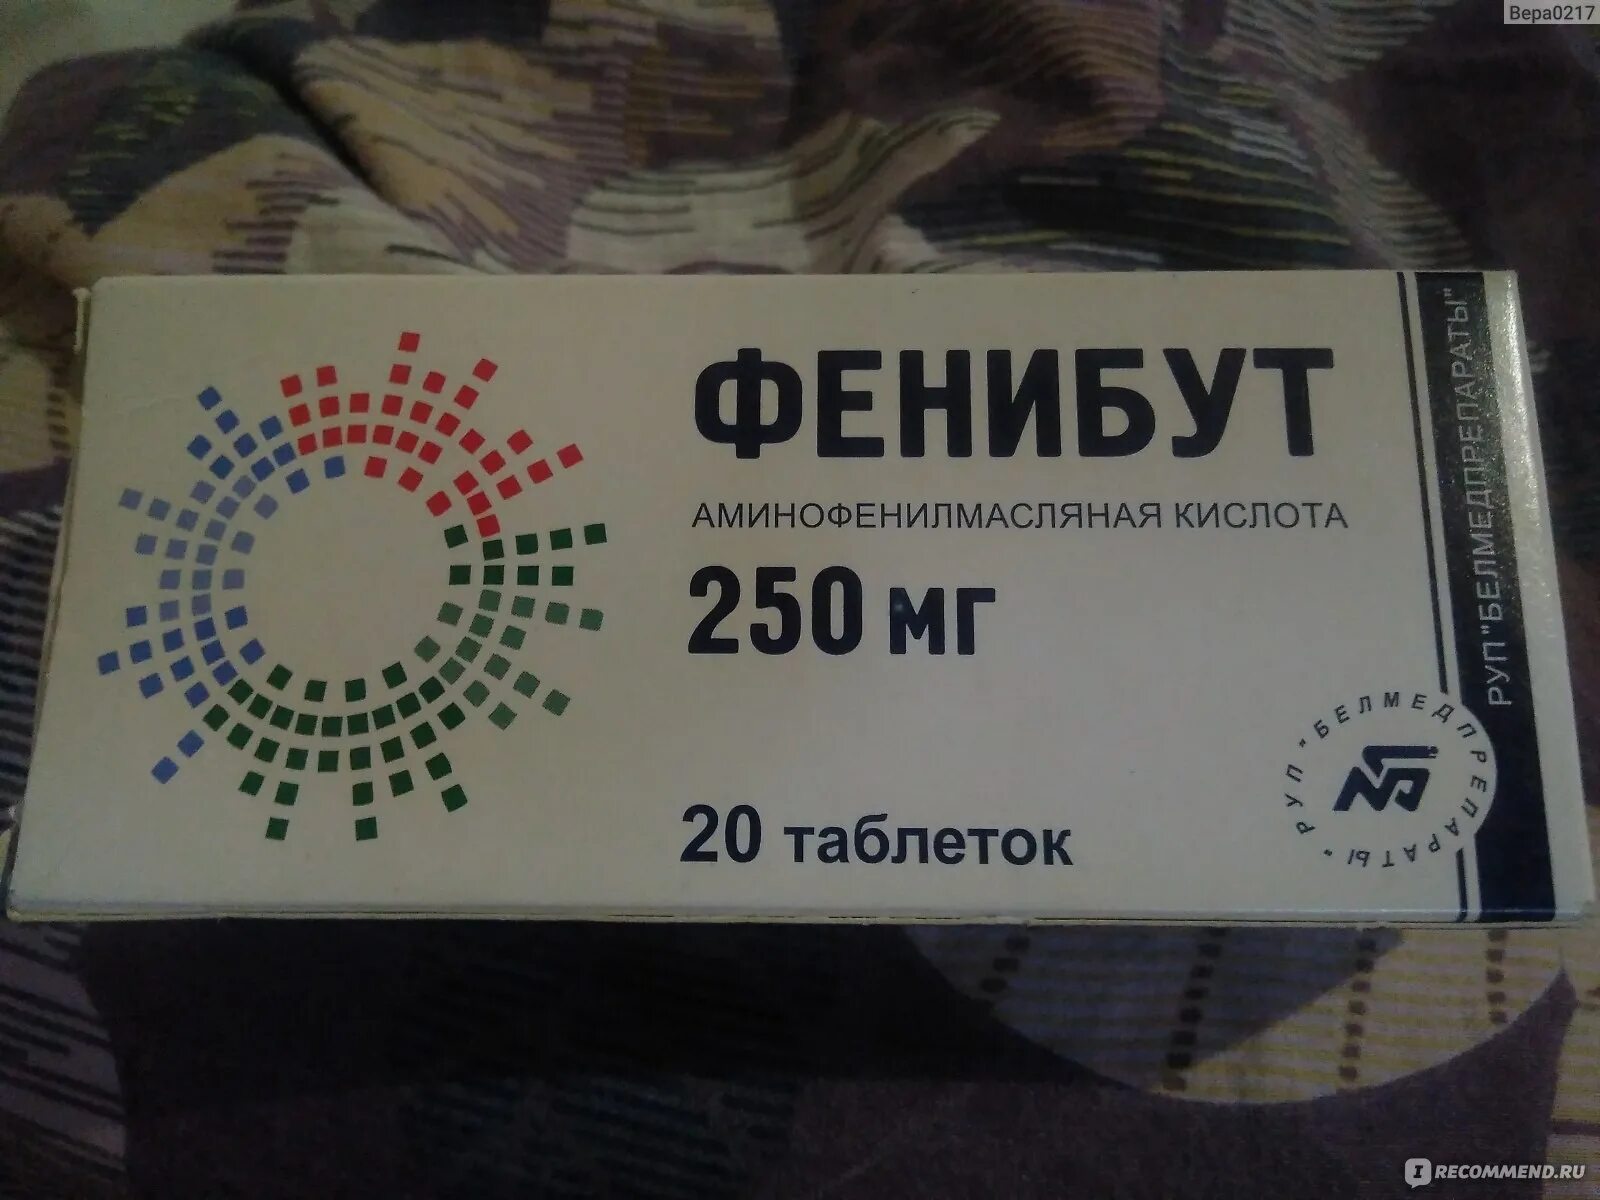 Фенибут таблетки производители. Фенибут 250 мг Прибалтика. Фенибут 250 мг латвийский. Фенибут 250 производитель Латвия. Фенибут 250 Прибалтика.